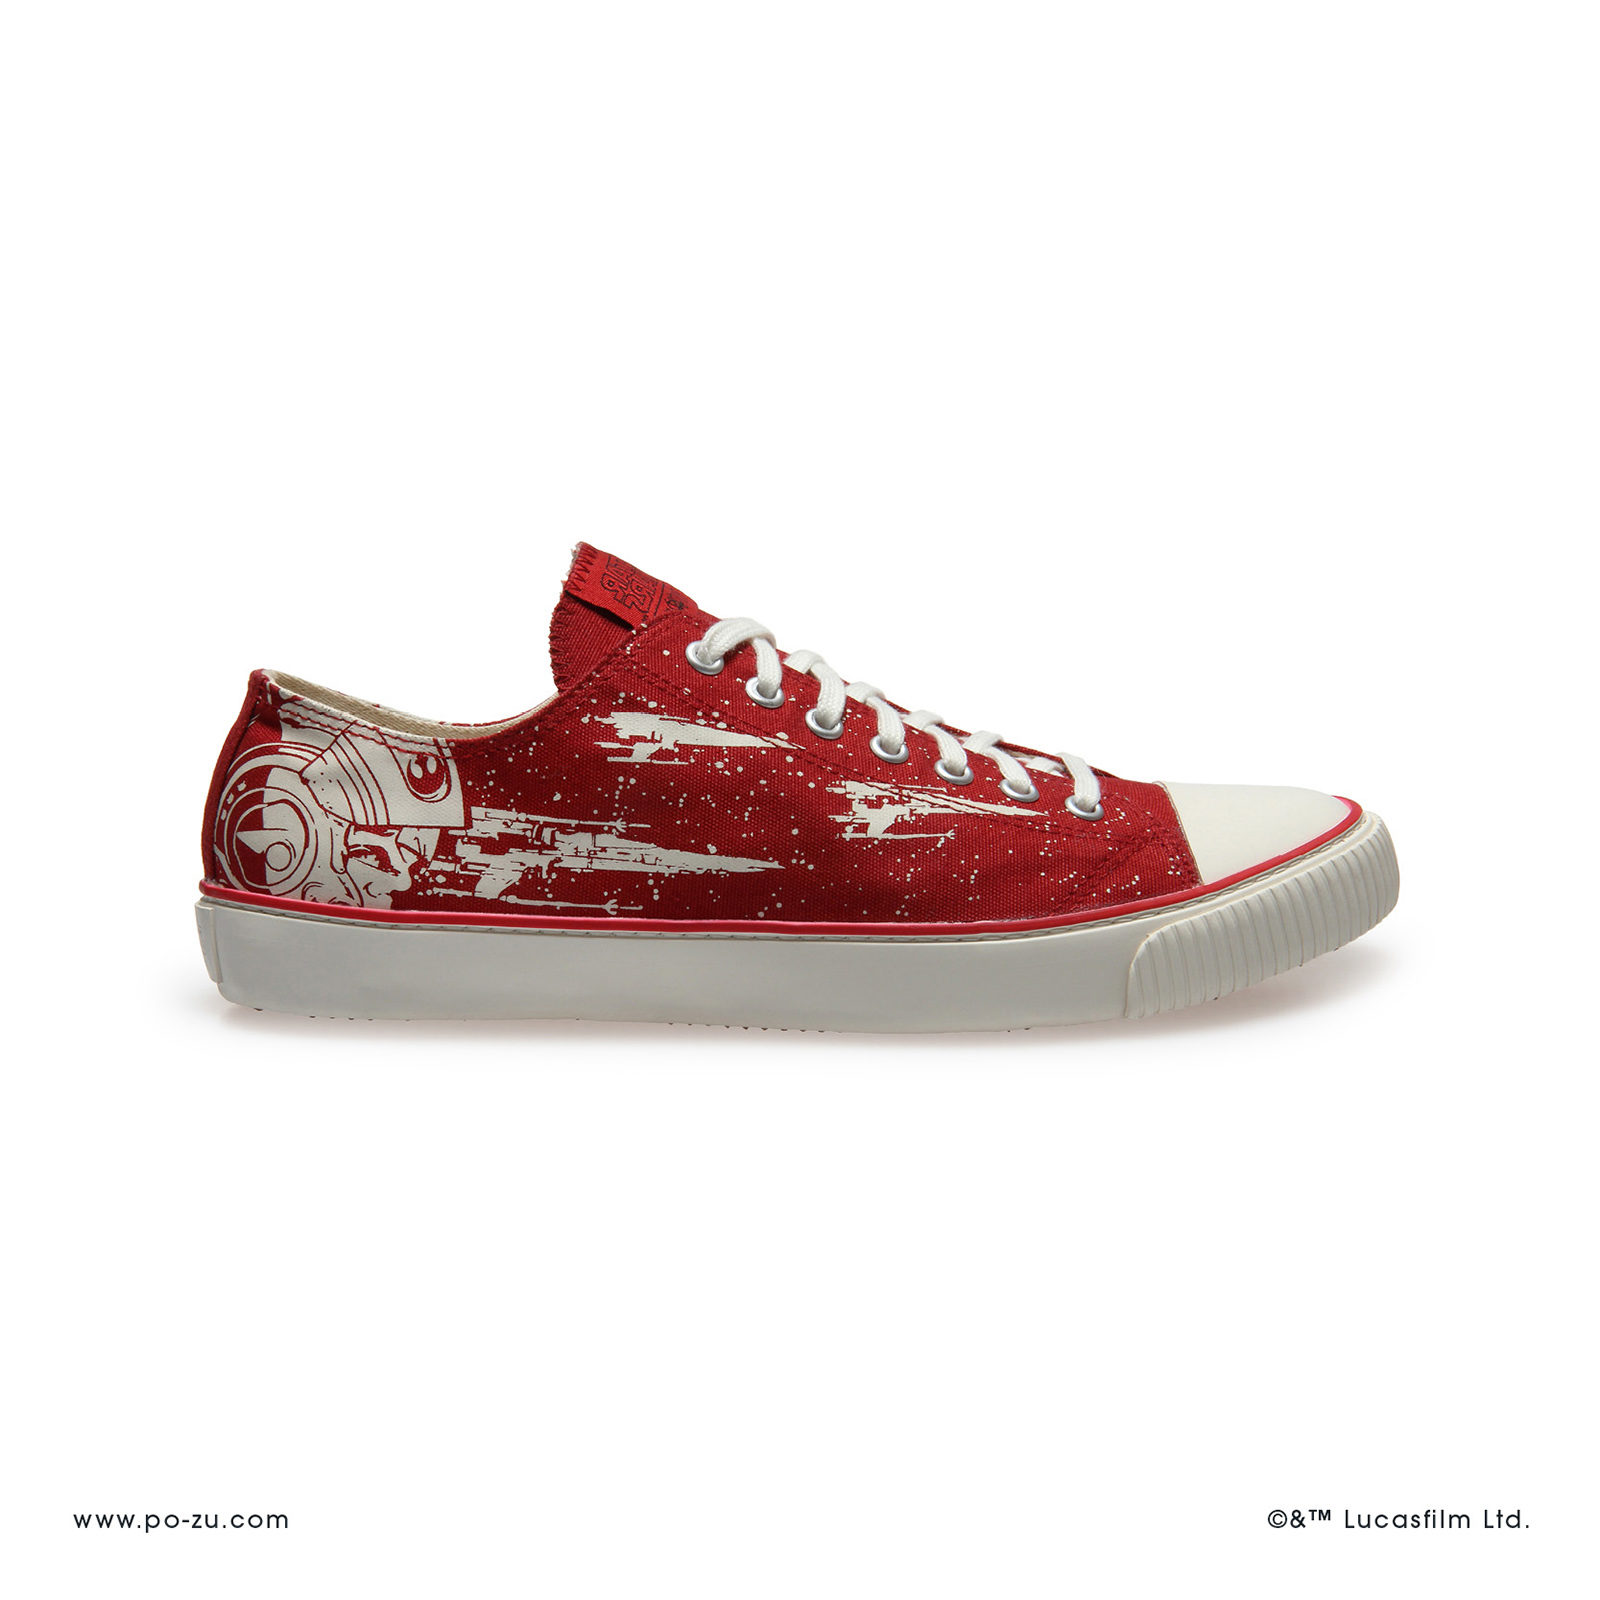 Po-Zu x Star Wars Red X-Wing Sneakers